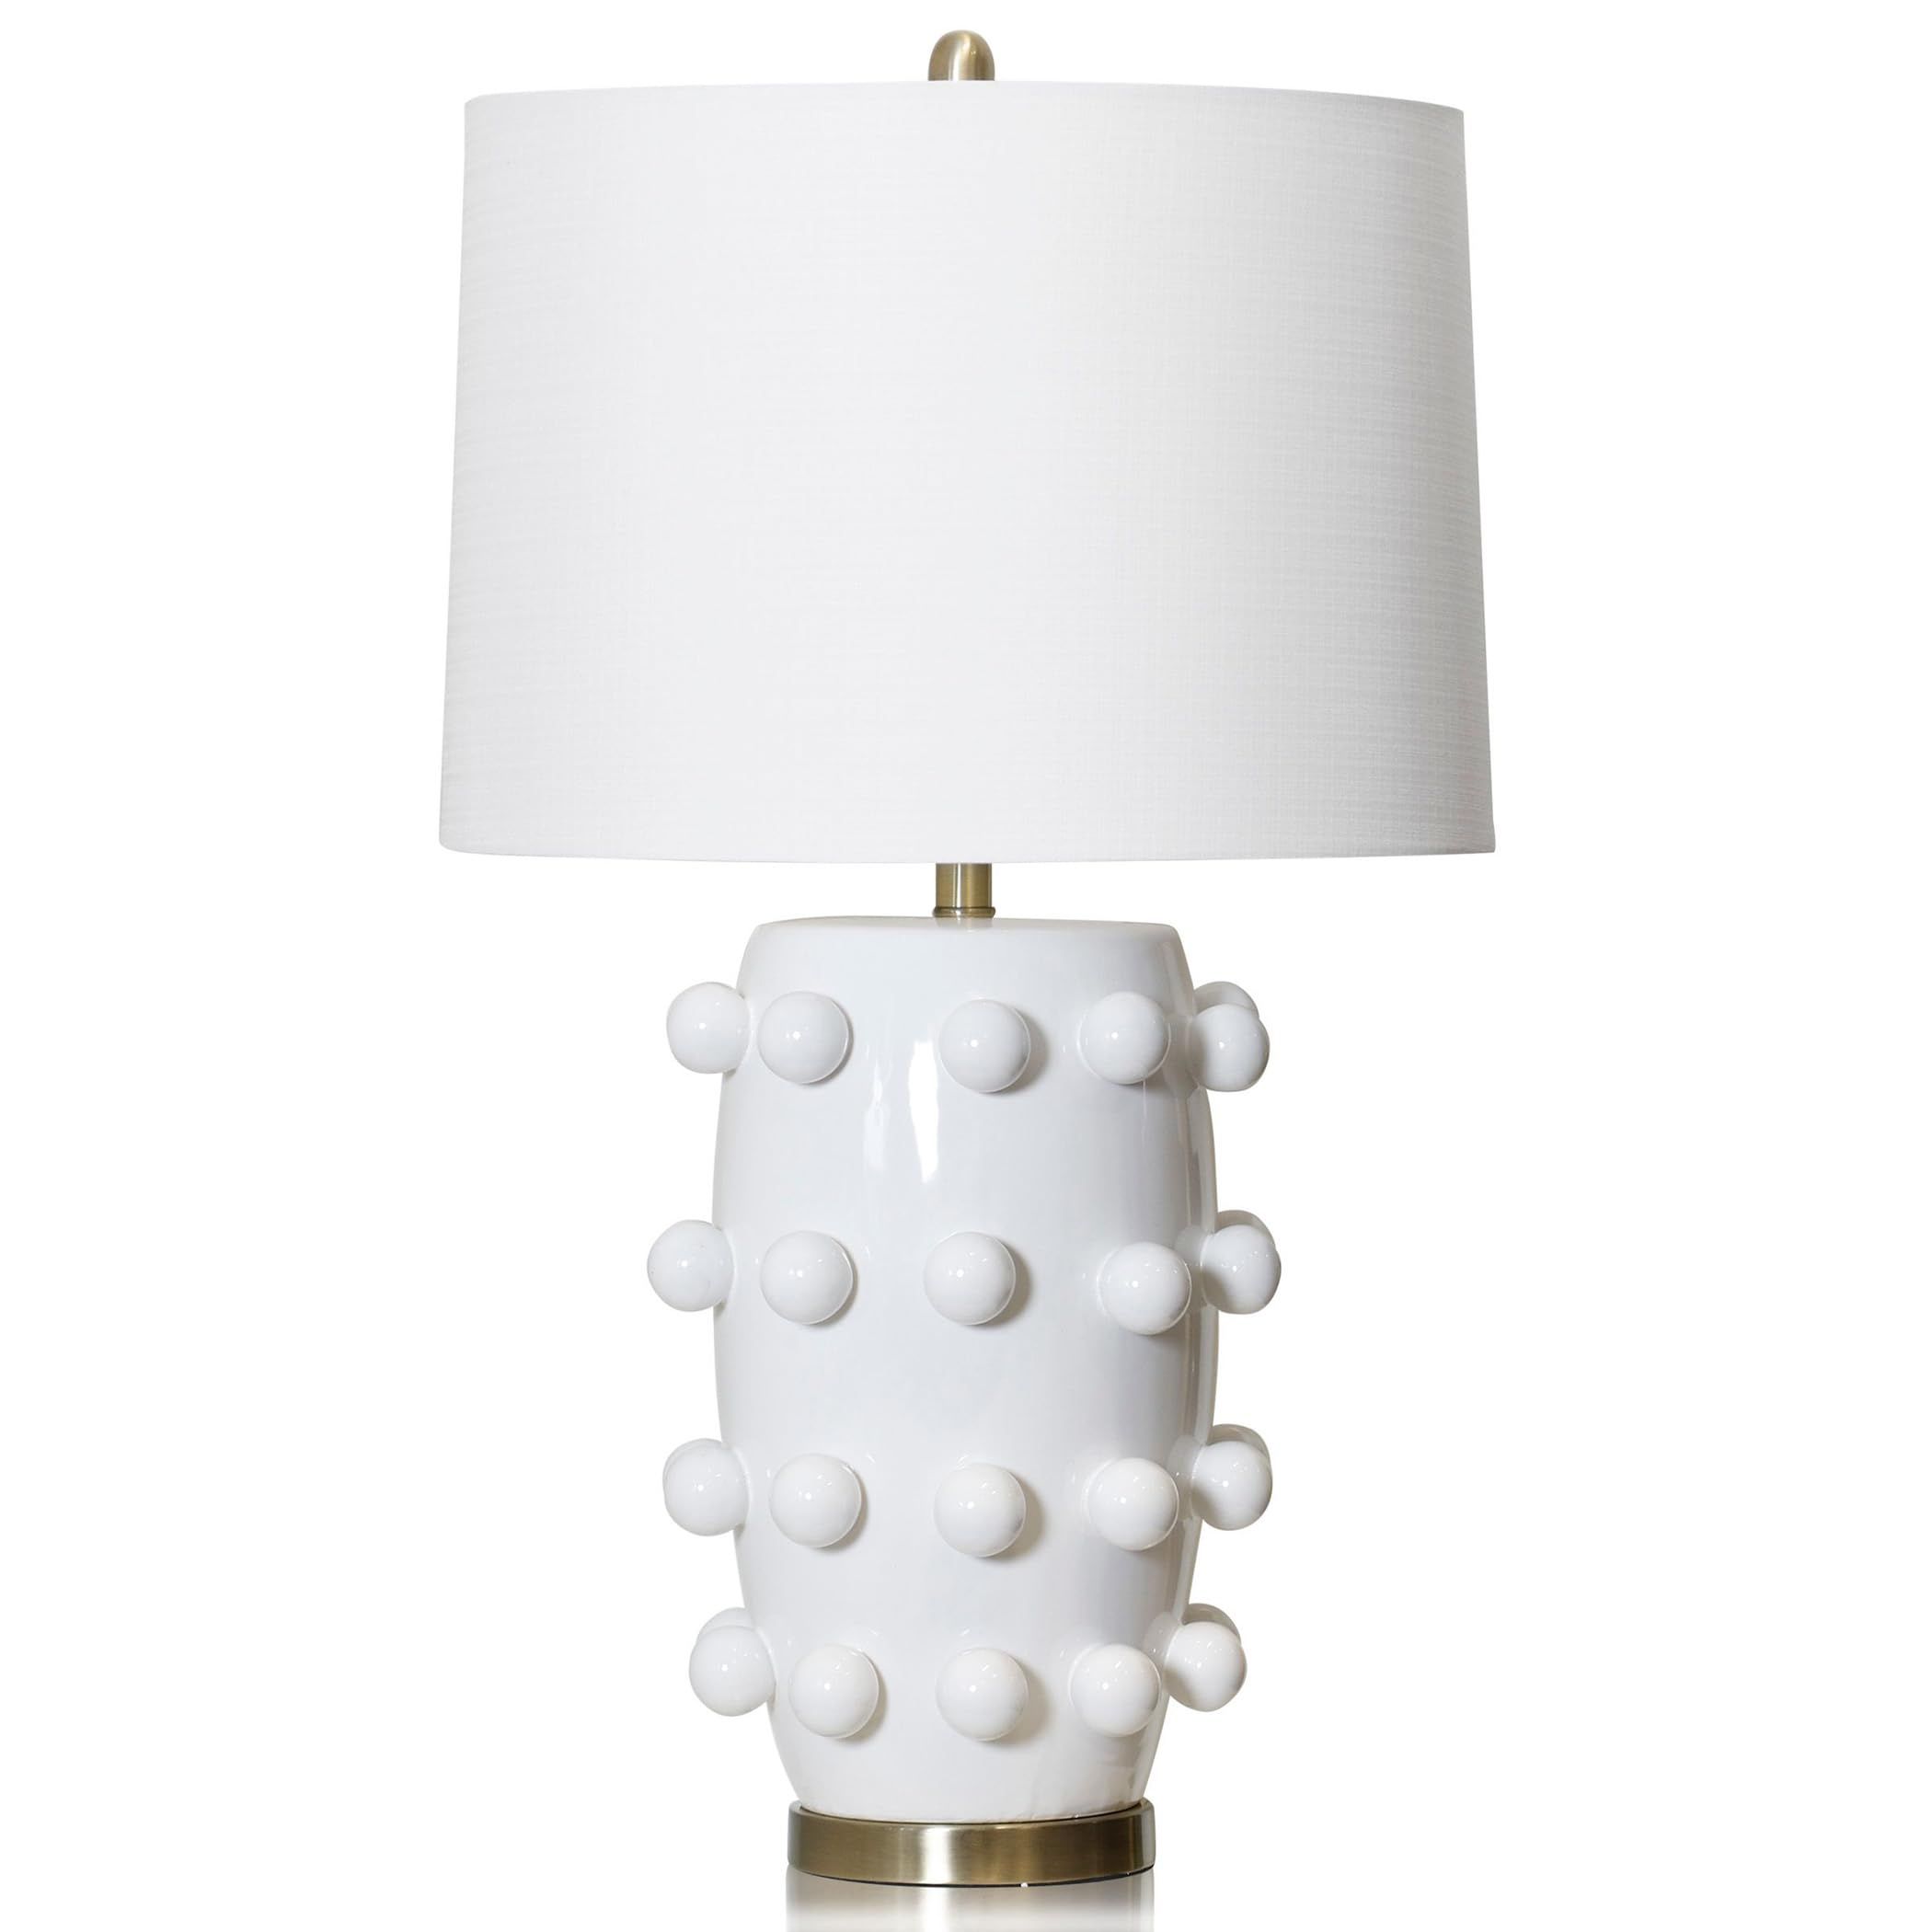 Collective Design Marni - Ceramic Table Lamp - White Finish, Brass Base - White Hardback Shade | Amazon (US)